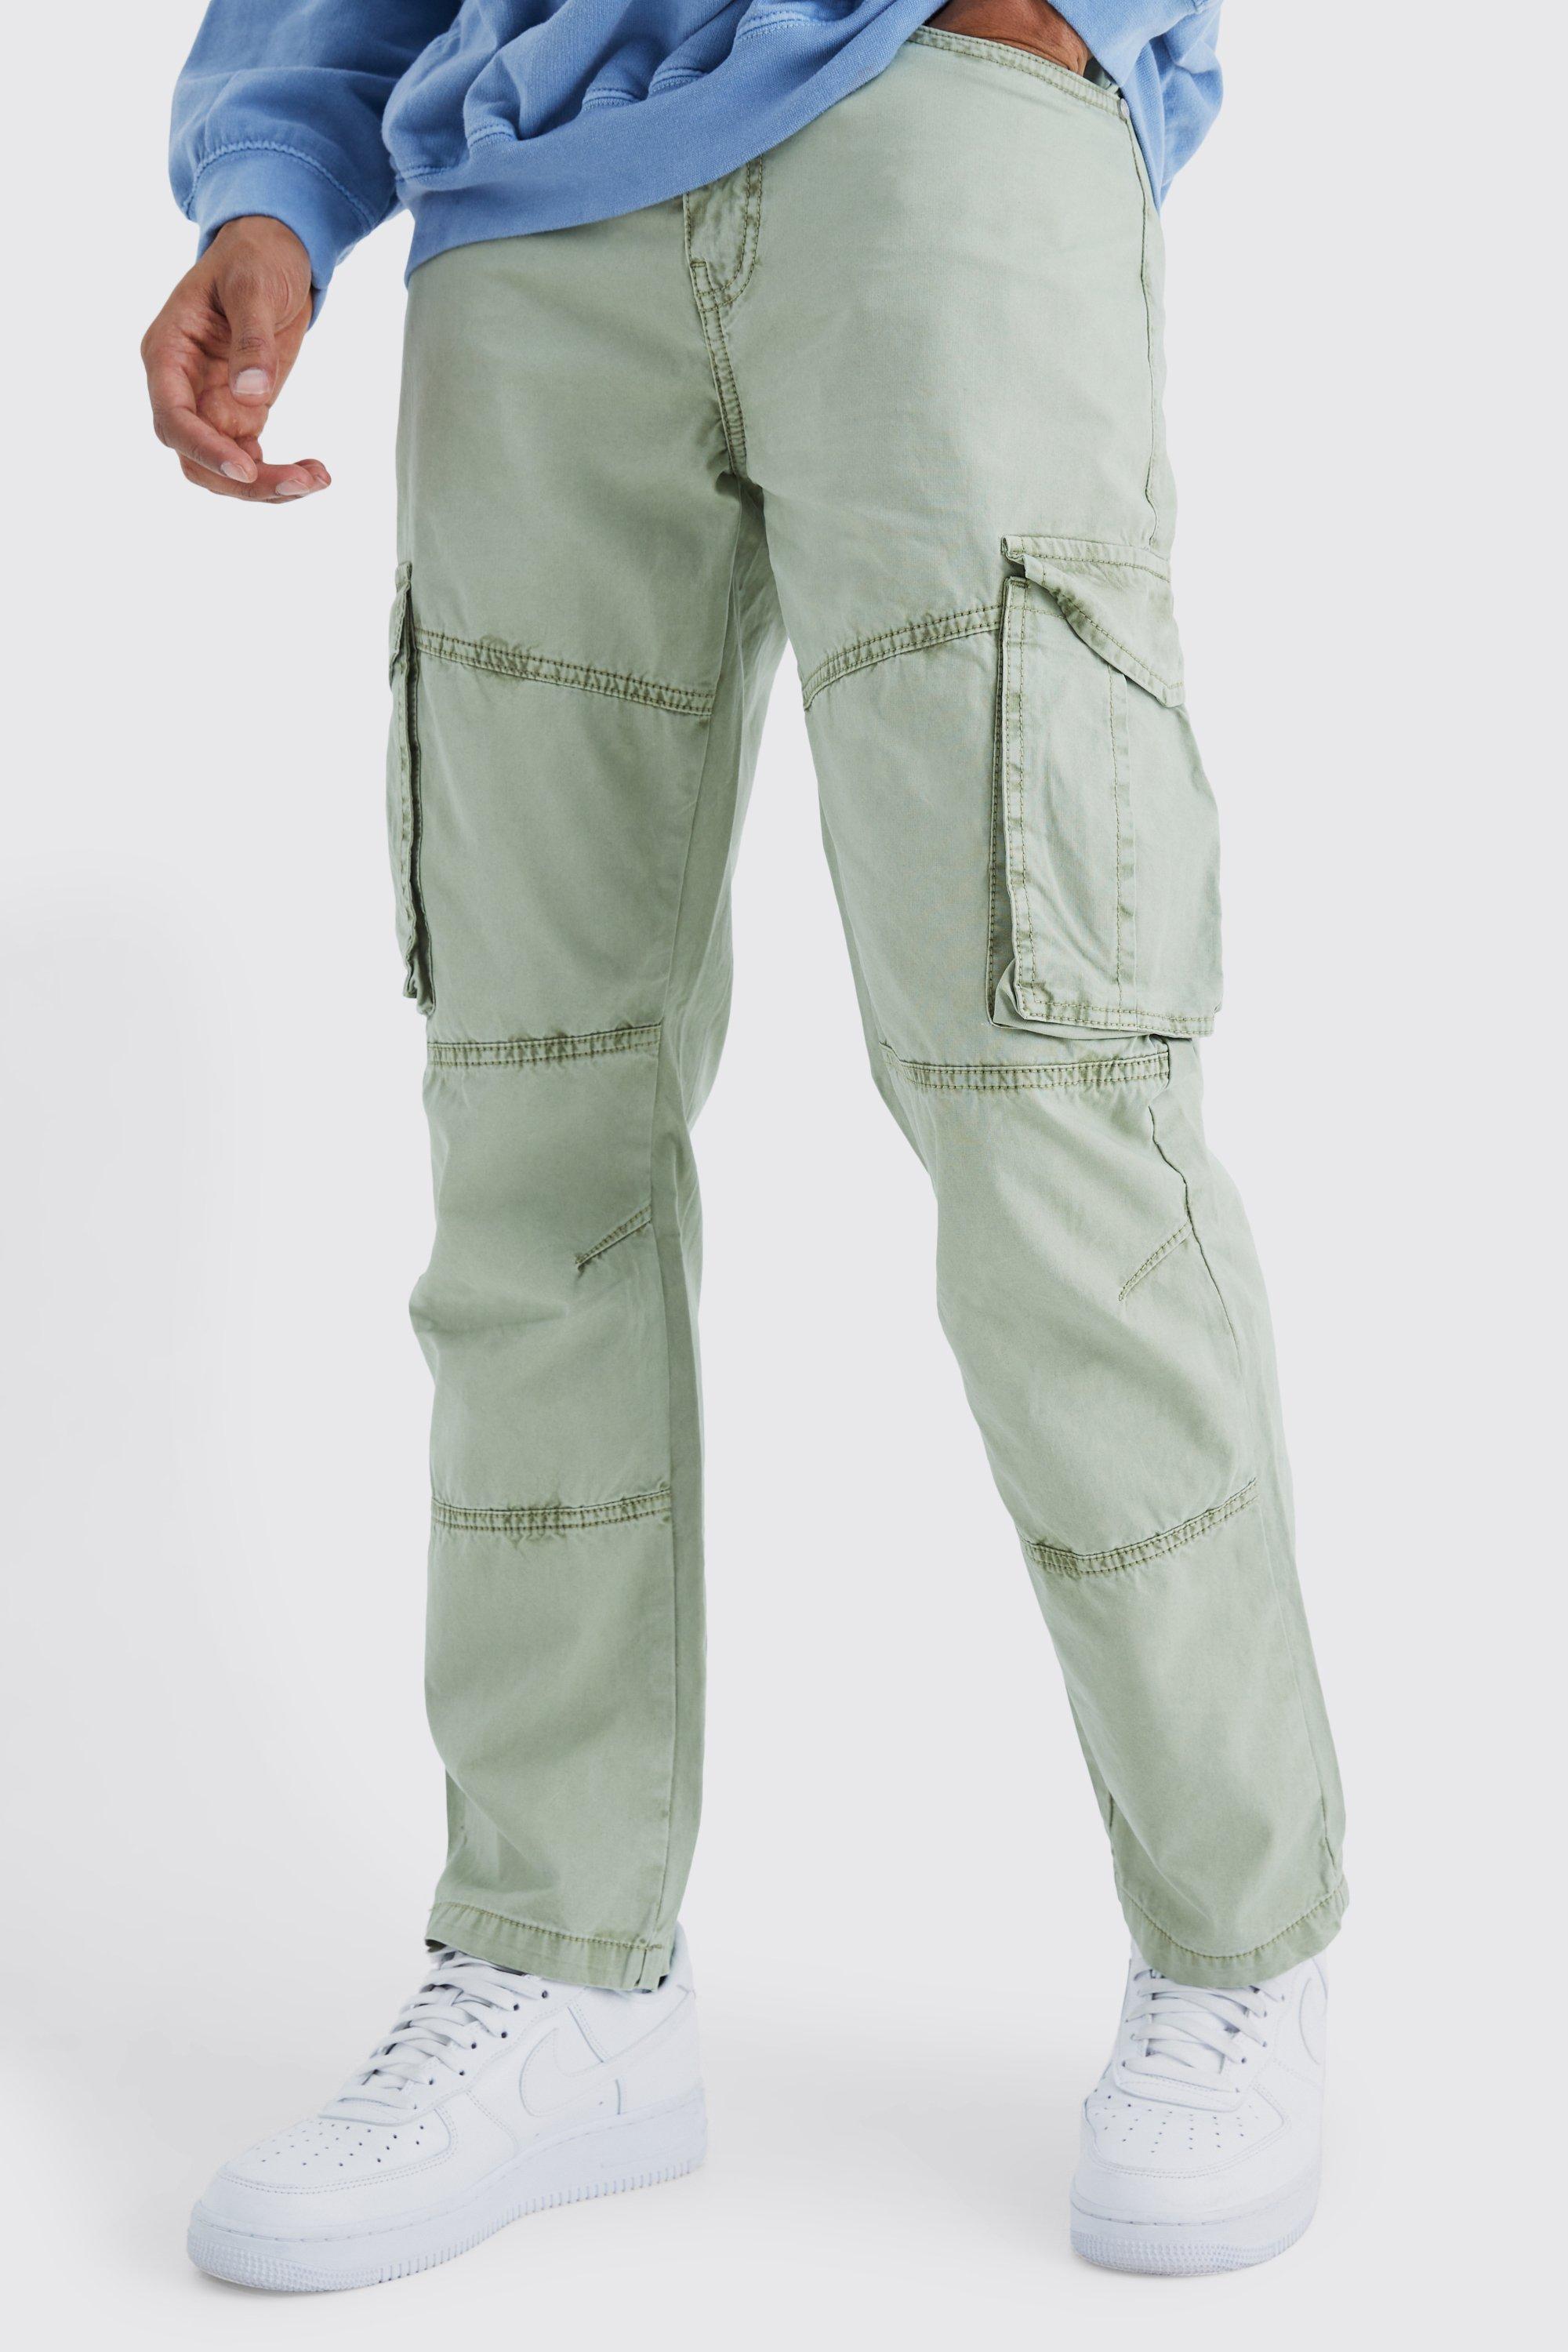 pantalon cargo droit surteint homme - vert - 34, vert